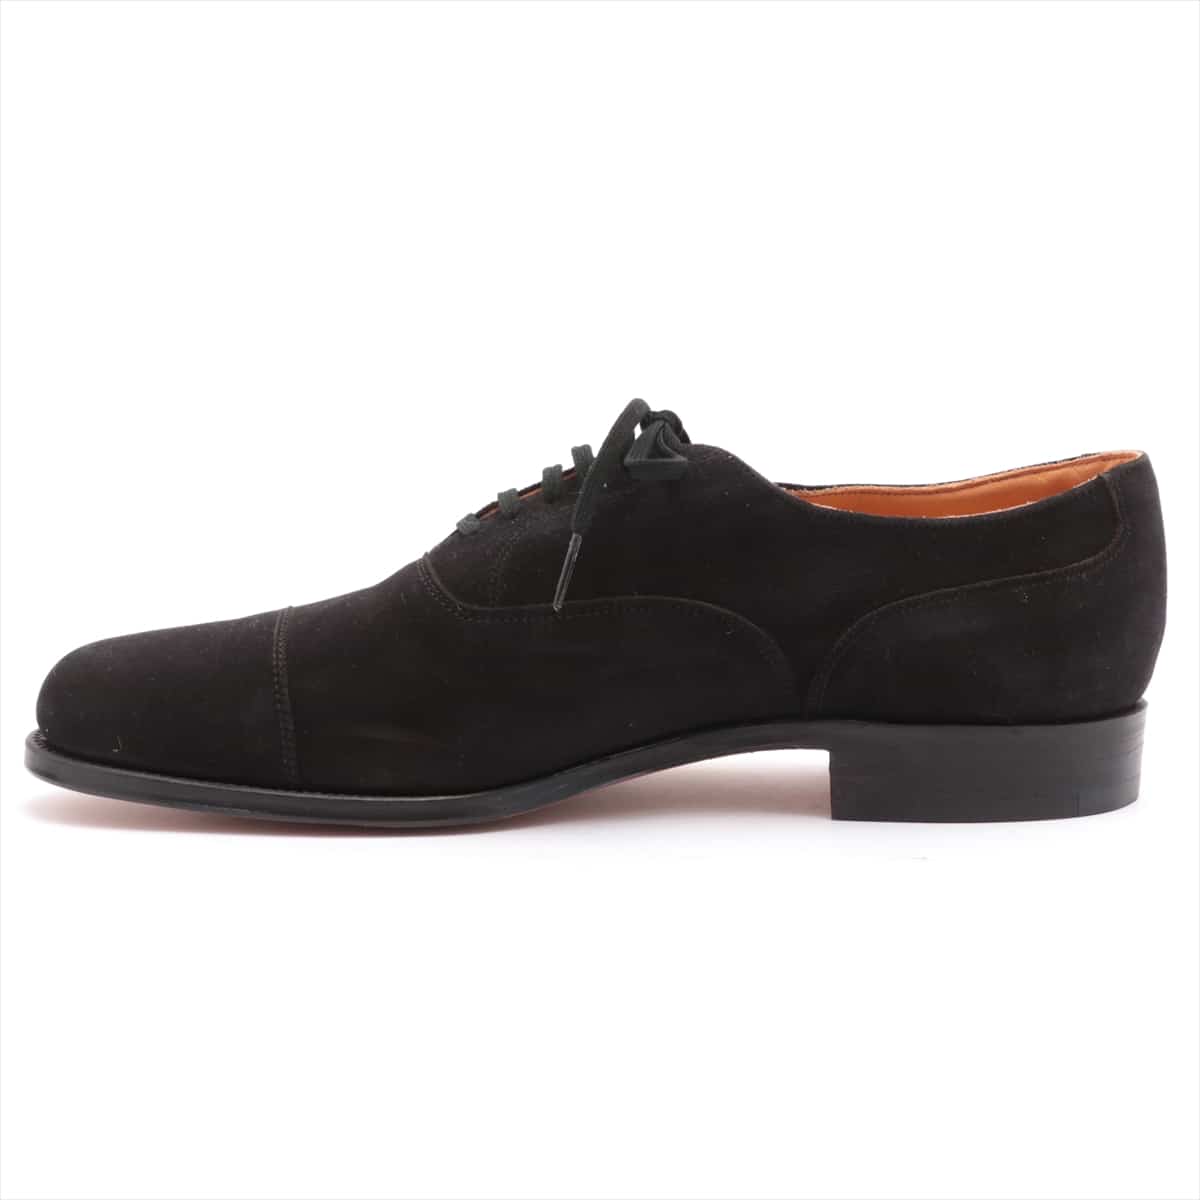 Grenson Suede Dress shoes 8.5 Men's Black